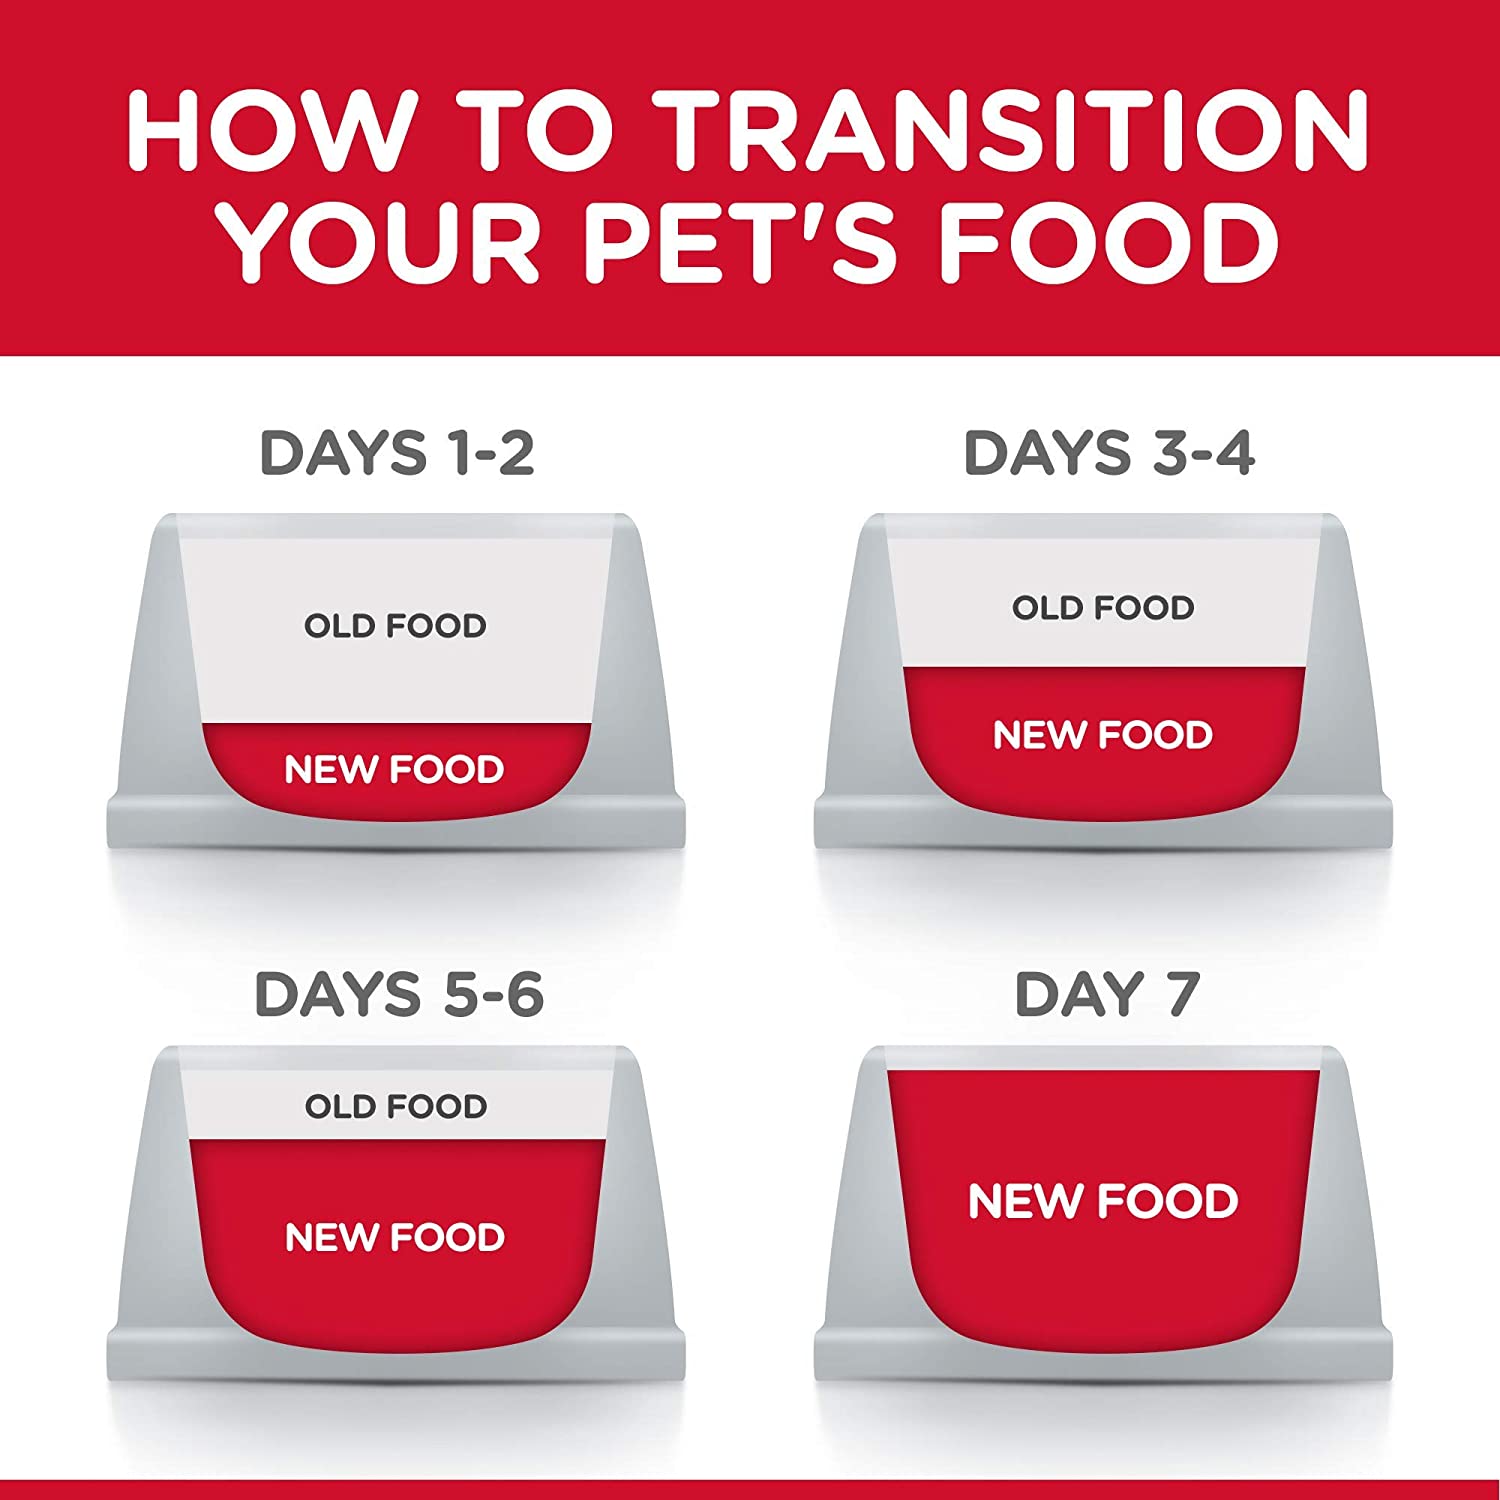 Hill's Science Diet Dry Dog Food Adult 1-6 Lamb Recipe  Dog Food  | PetMax Canada